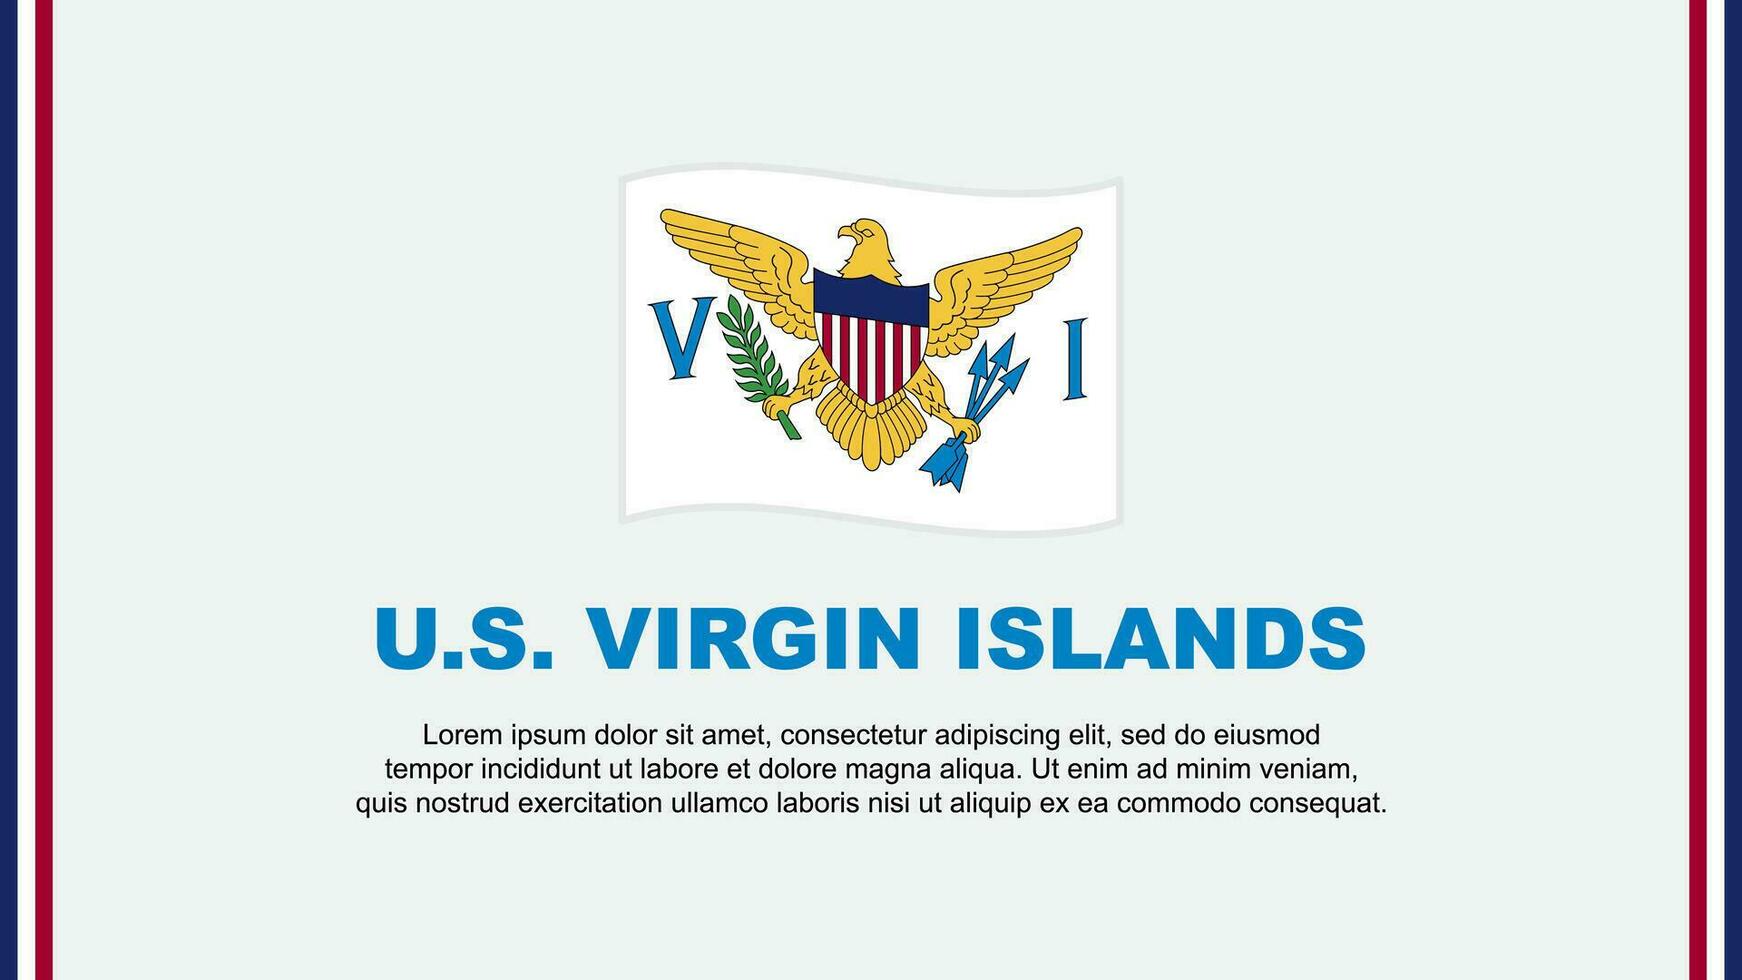 U.S. Virgin Islands Flag Abstract Background Design Template. U.S. Virgin Islands Independence Day Banner Social Media Vector Illustration. U.S. Virgin Islands Cartoon